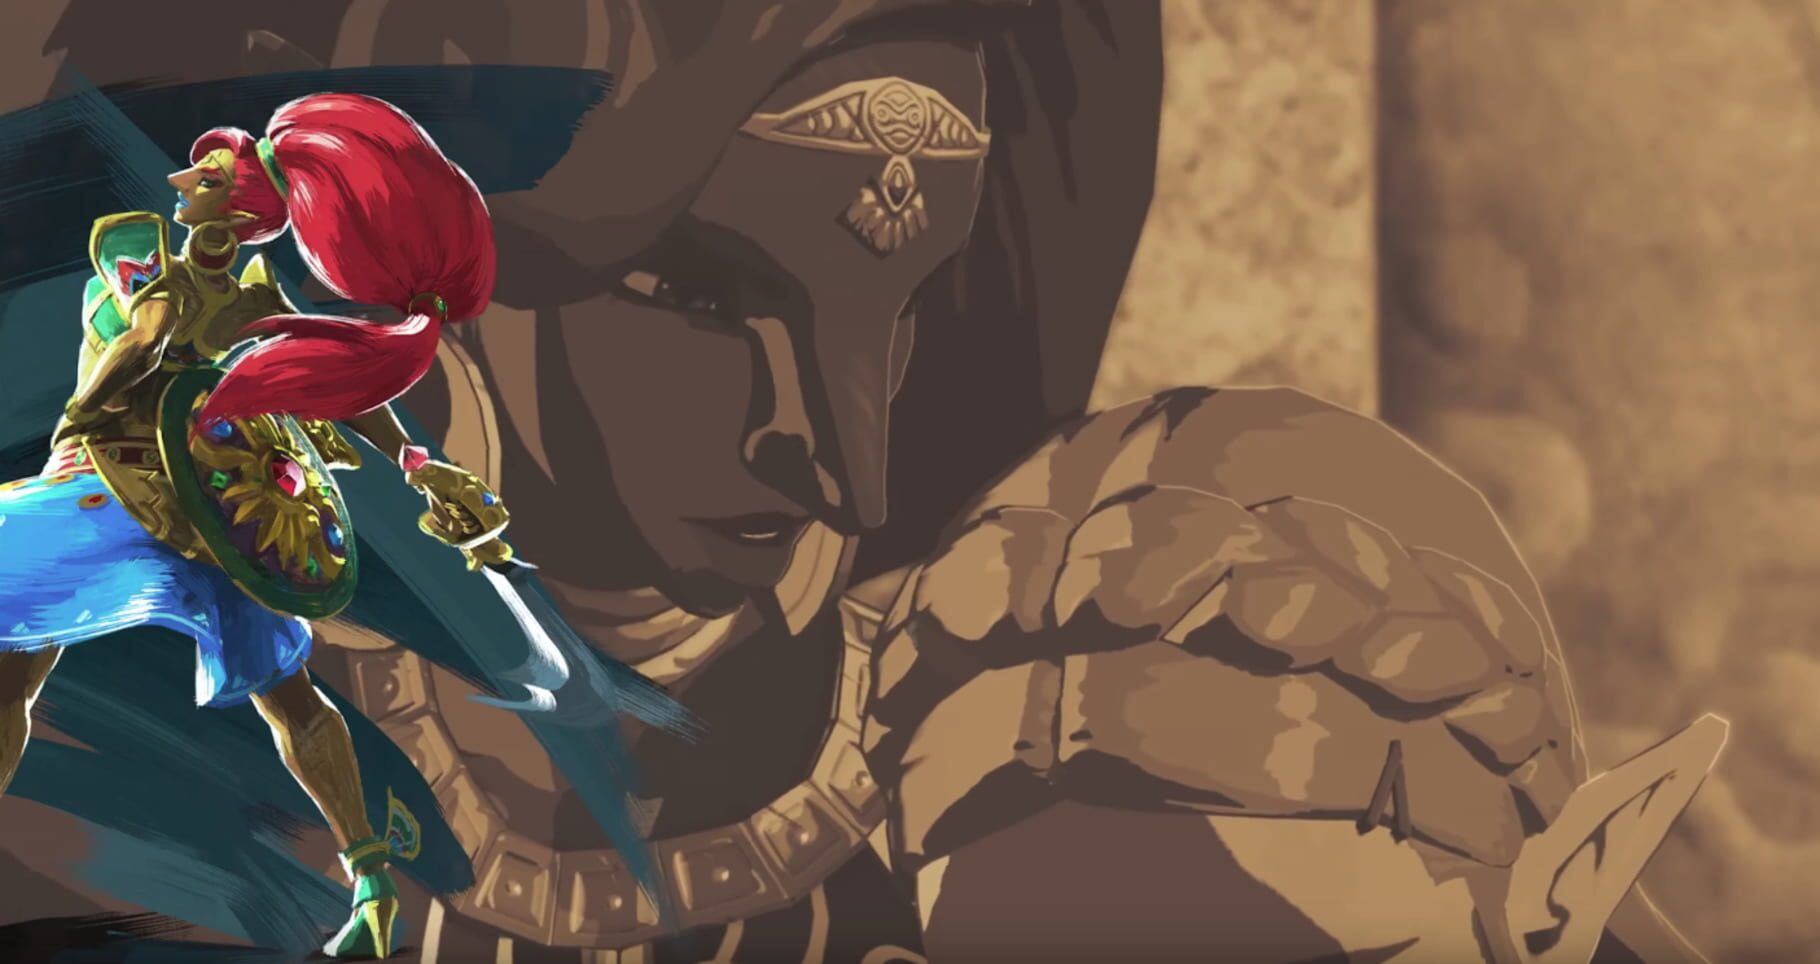 Captura de pantalla - The Legend of Zelda: Breath of the Wild - The Champions' Ballad